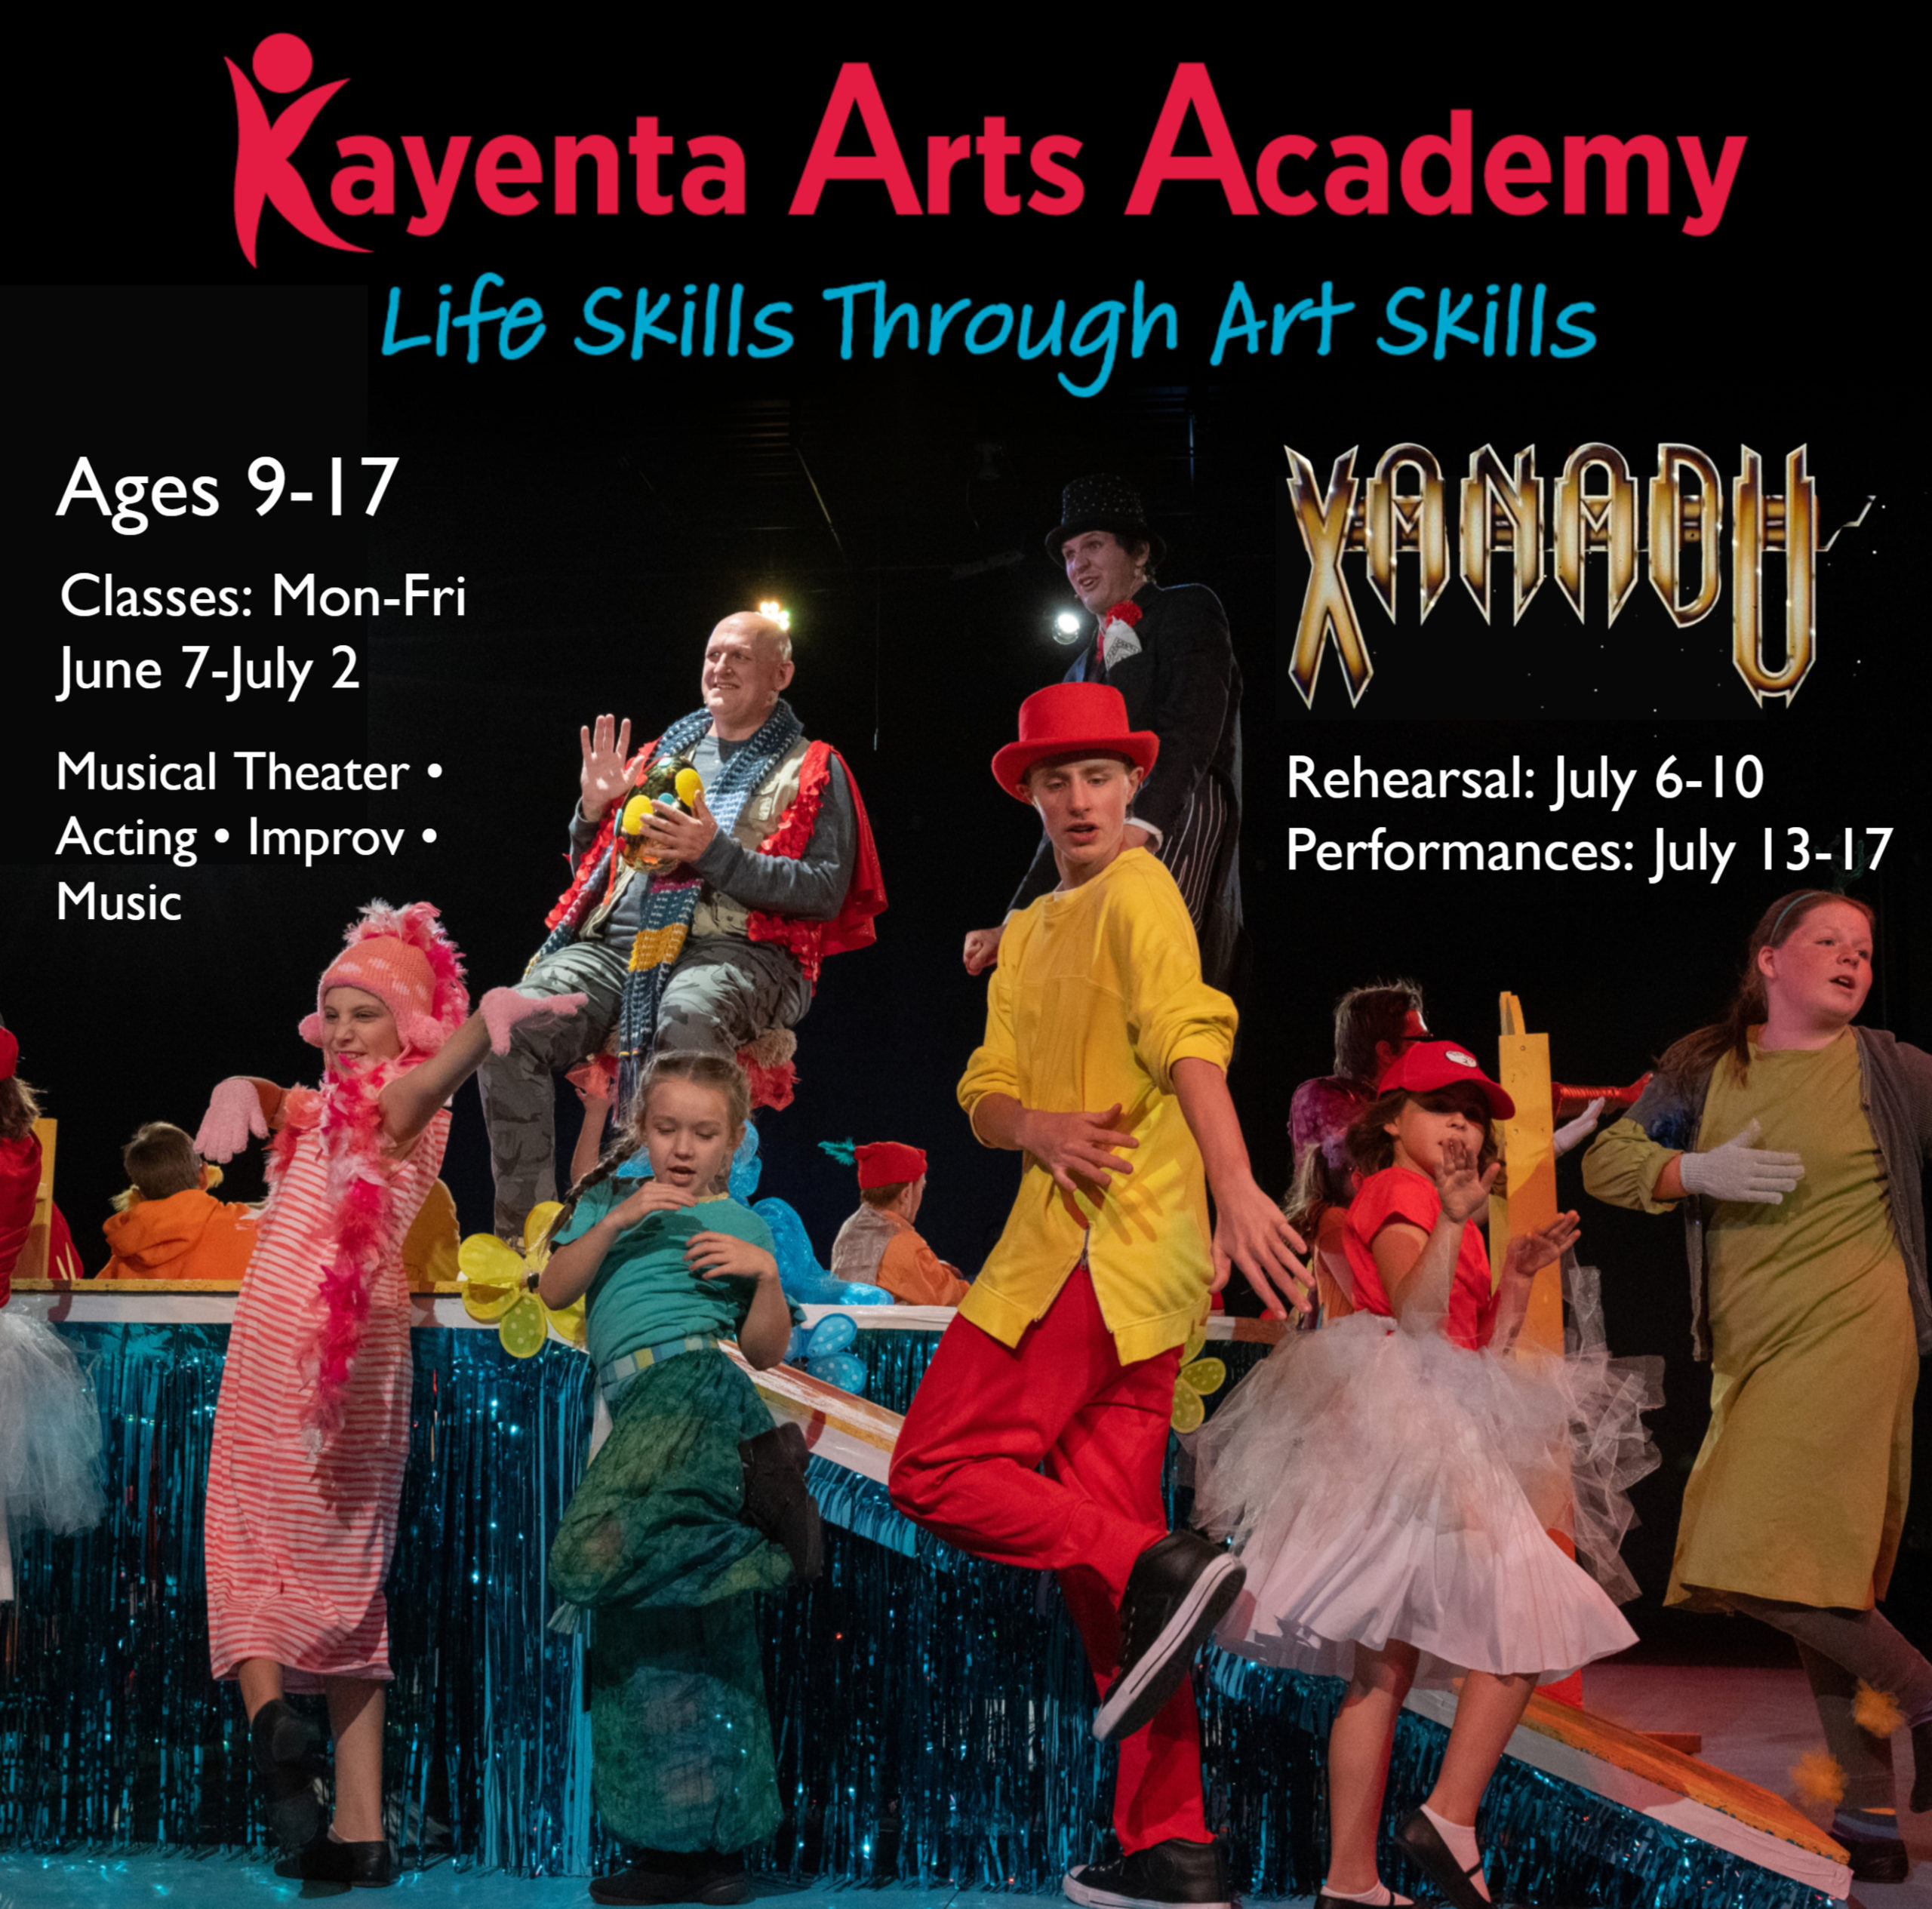 Kayenta Arts Academy